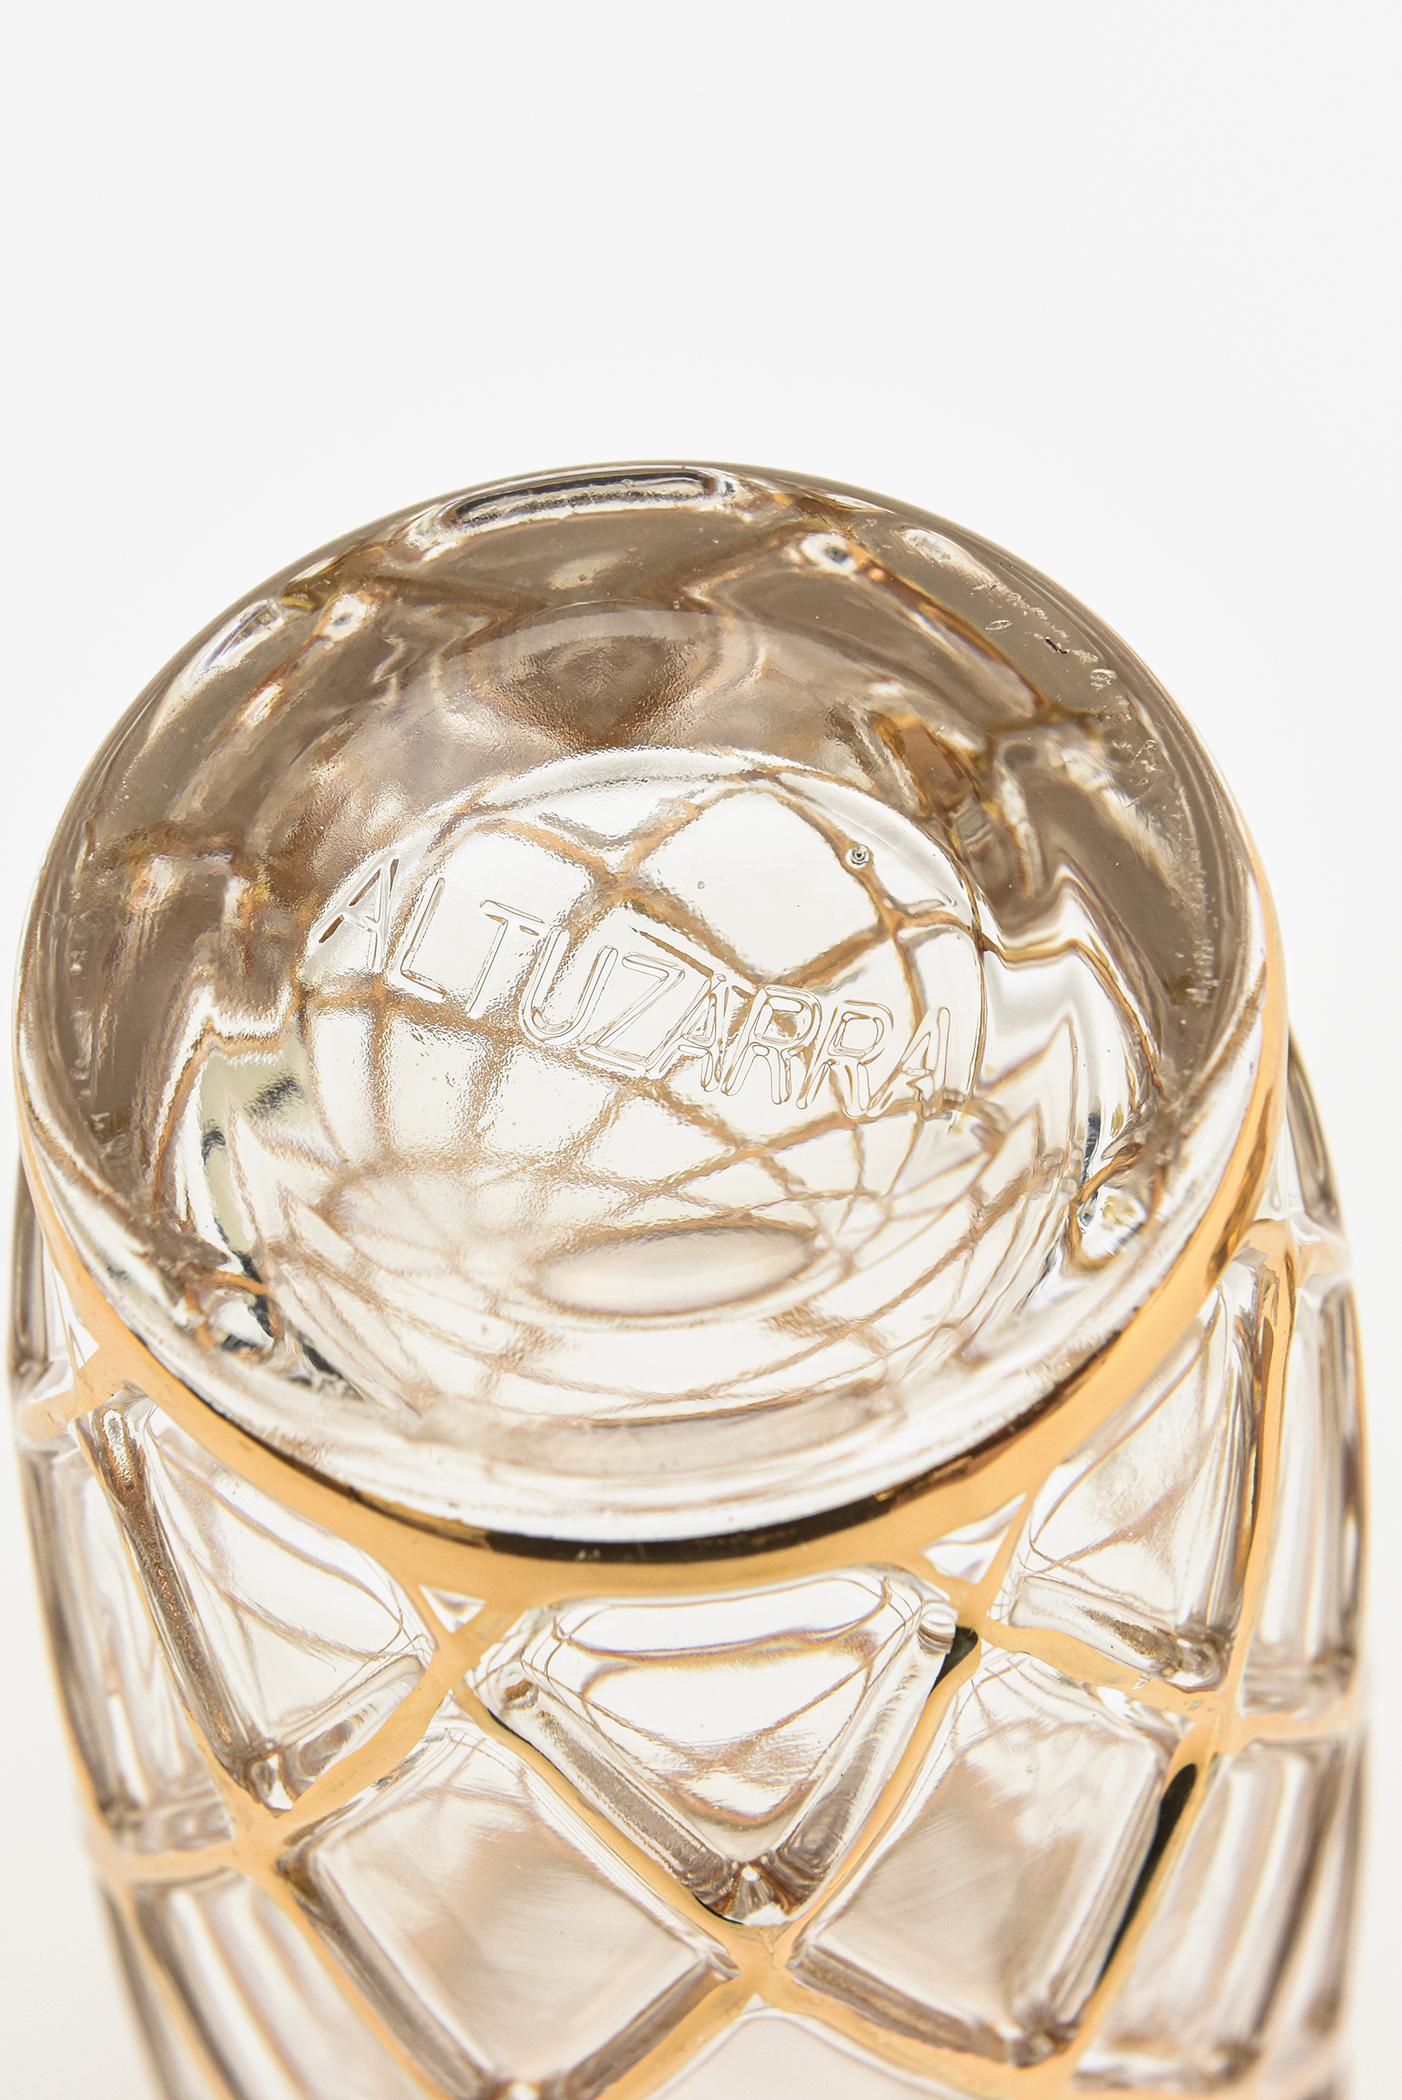 Altuzarra 18K Gold and Glass Diamond Patterned Cocktail Shaker Barware 2